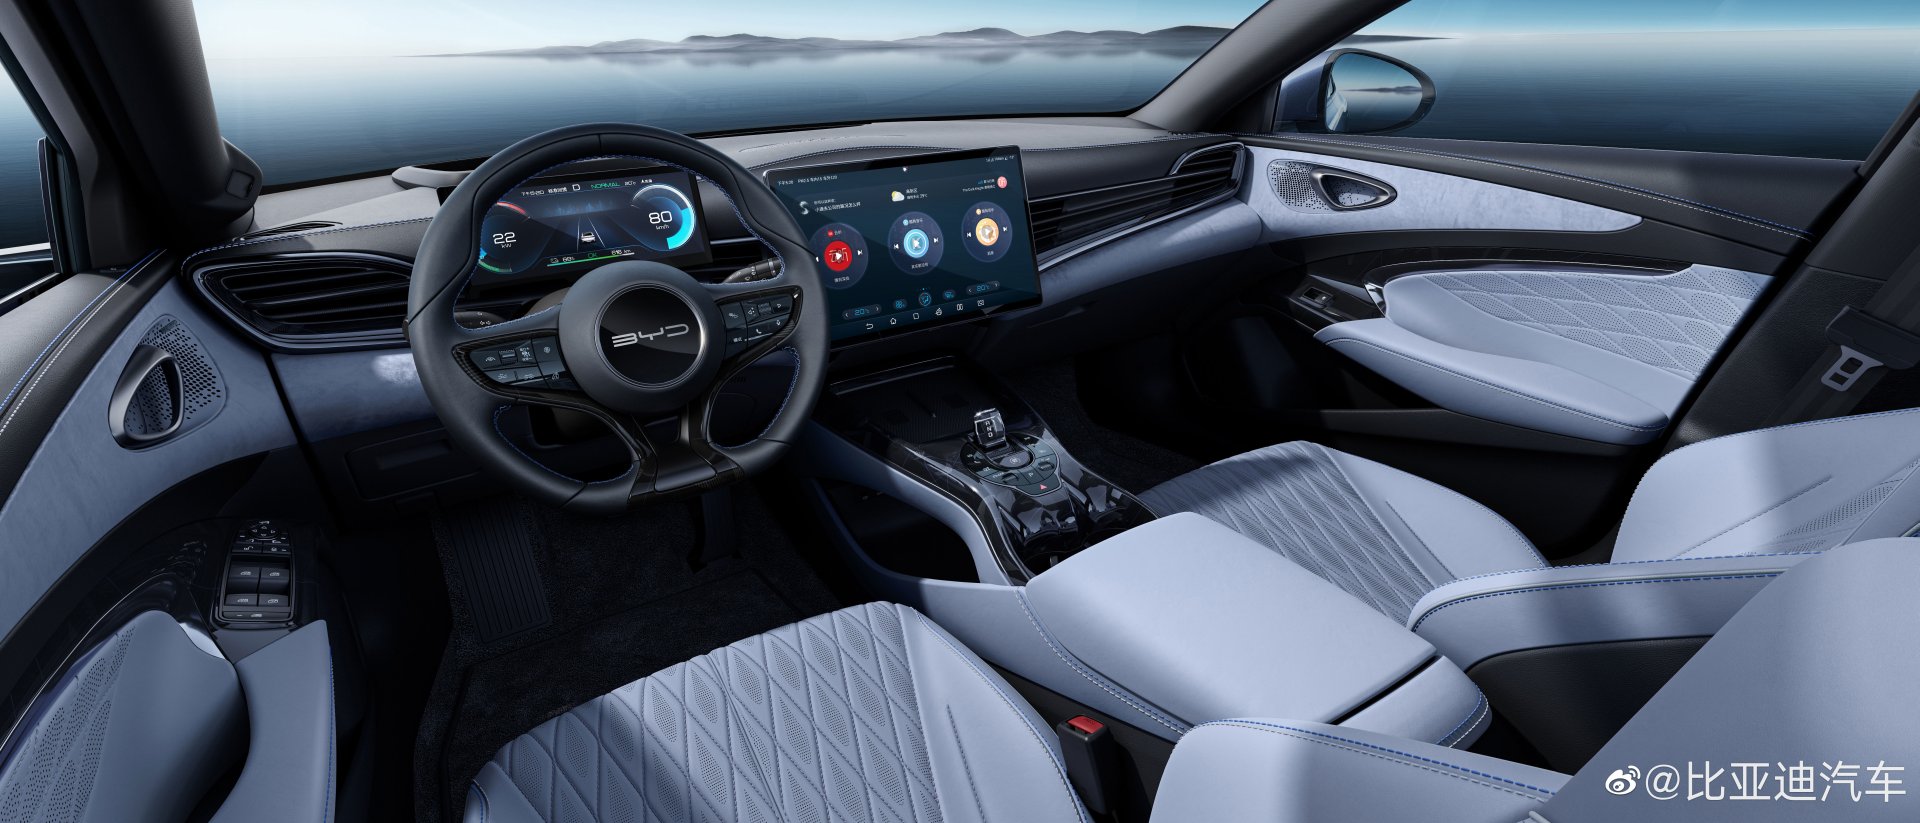 BYD Seal Interior Revealed Ahead of May Sales Start, Has Tesla